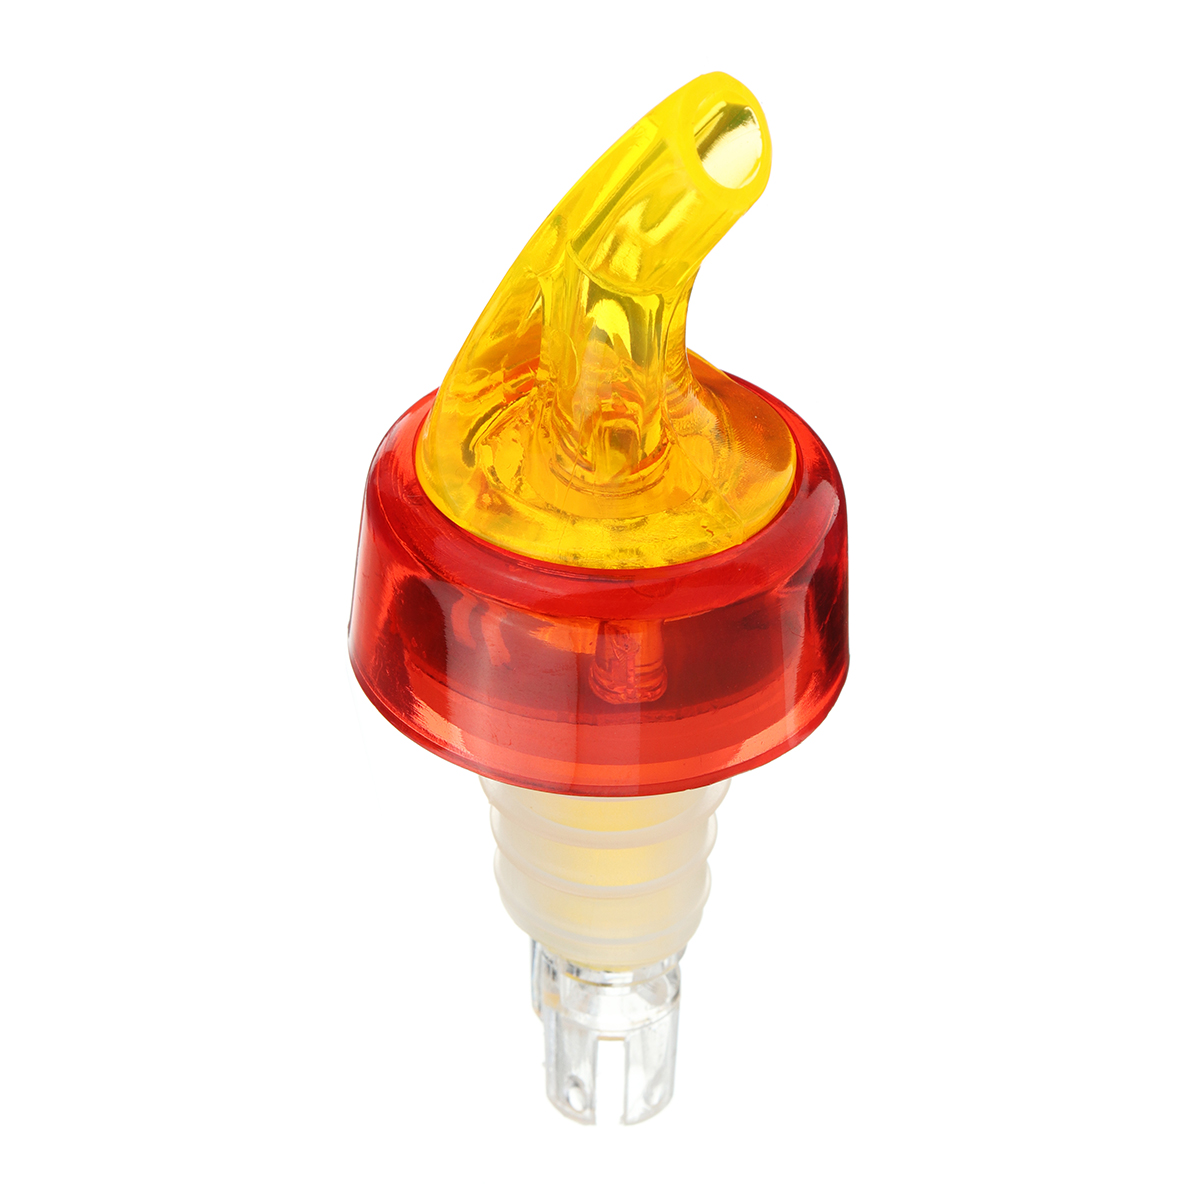 Spout-Bottle-Bar-Beverage-Dispenser-Quick-Shot-Spirit-Nip-Tool-Home-Illuminated-LED-Colorful-Pourer-1442647-6